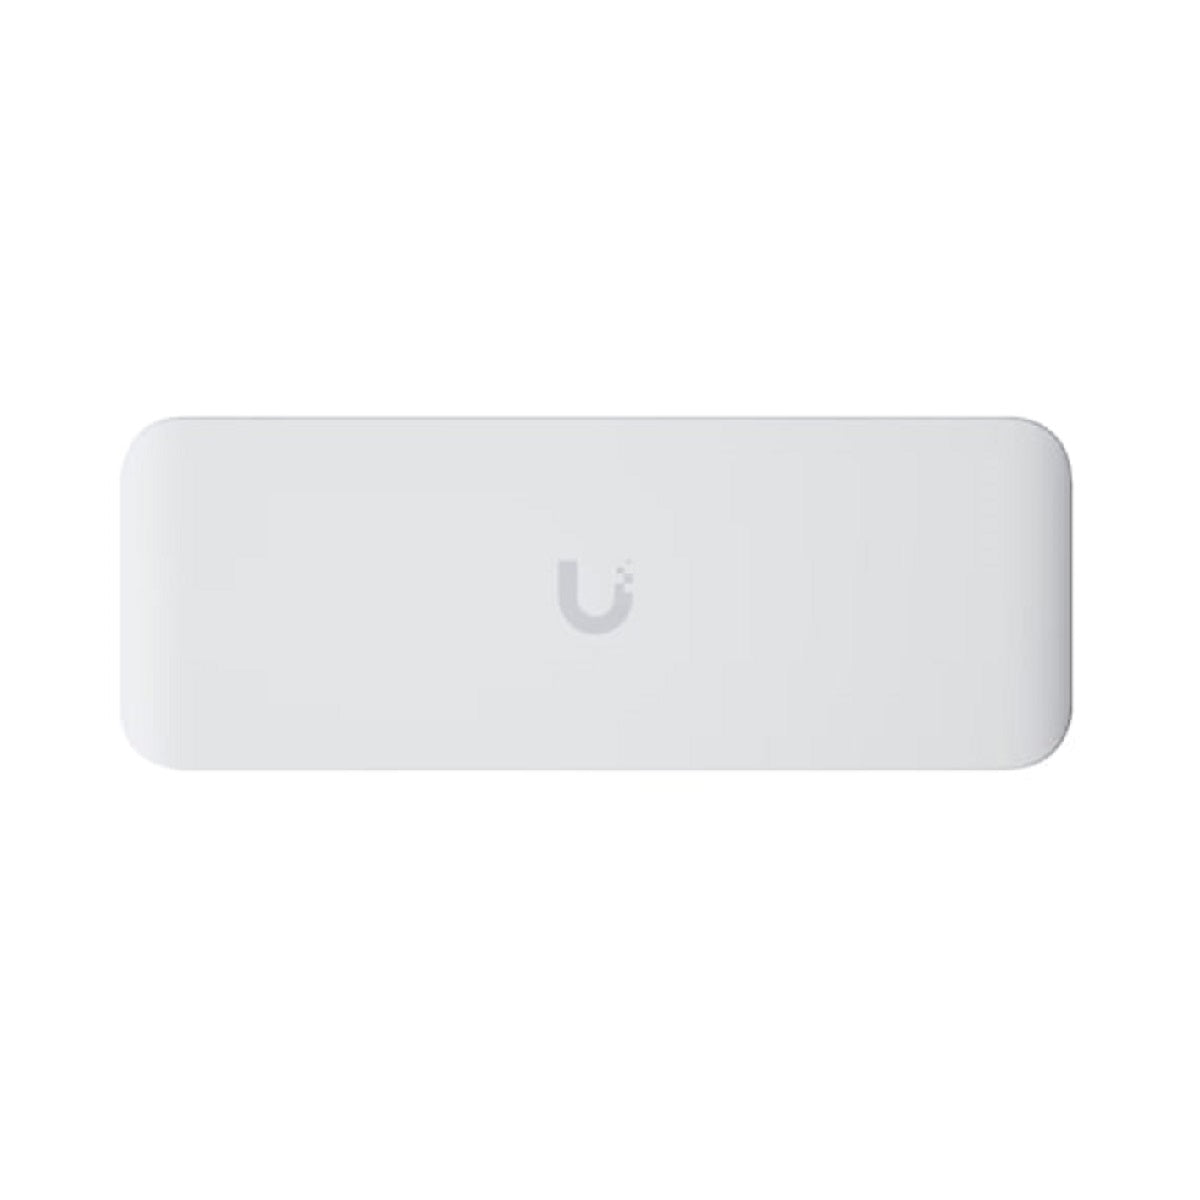 Ubiquiti USW-Ultra 8-Port Managed GbE PoE+ Access Switch